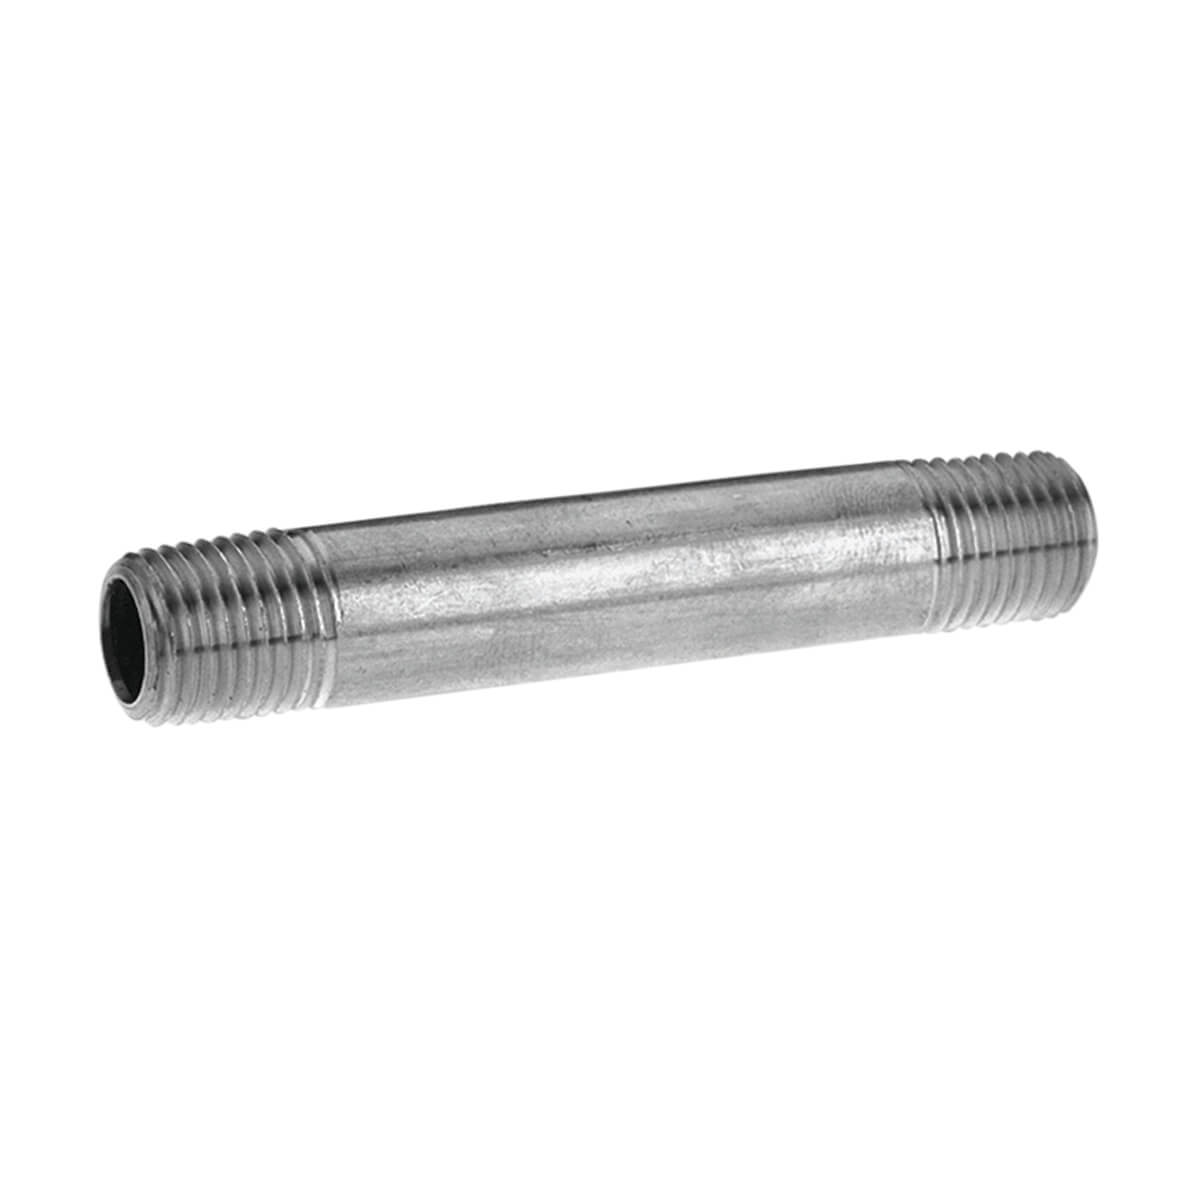 Pipe Nipple Galvanized Steel - 3/4-in x 60-in